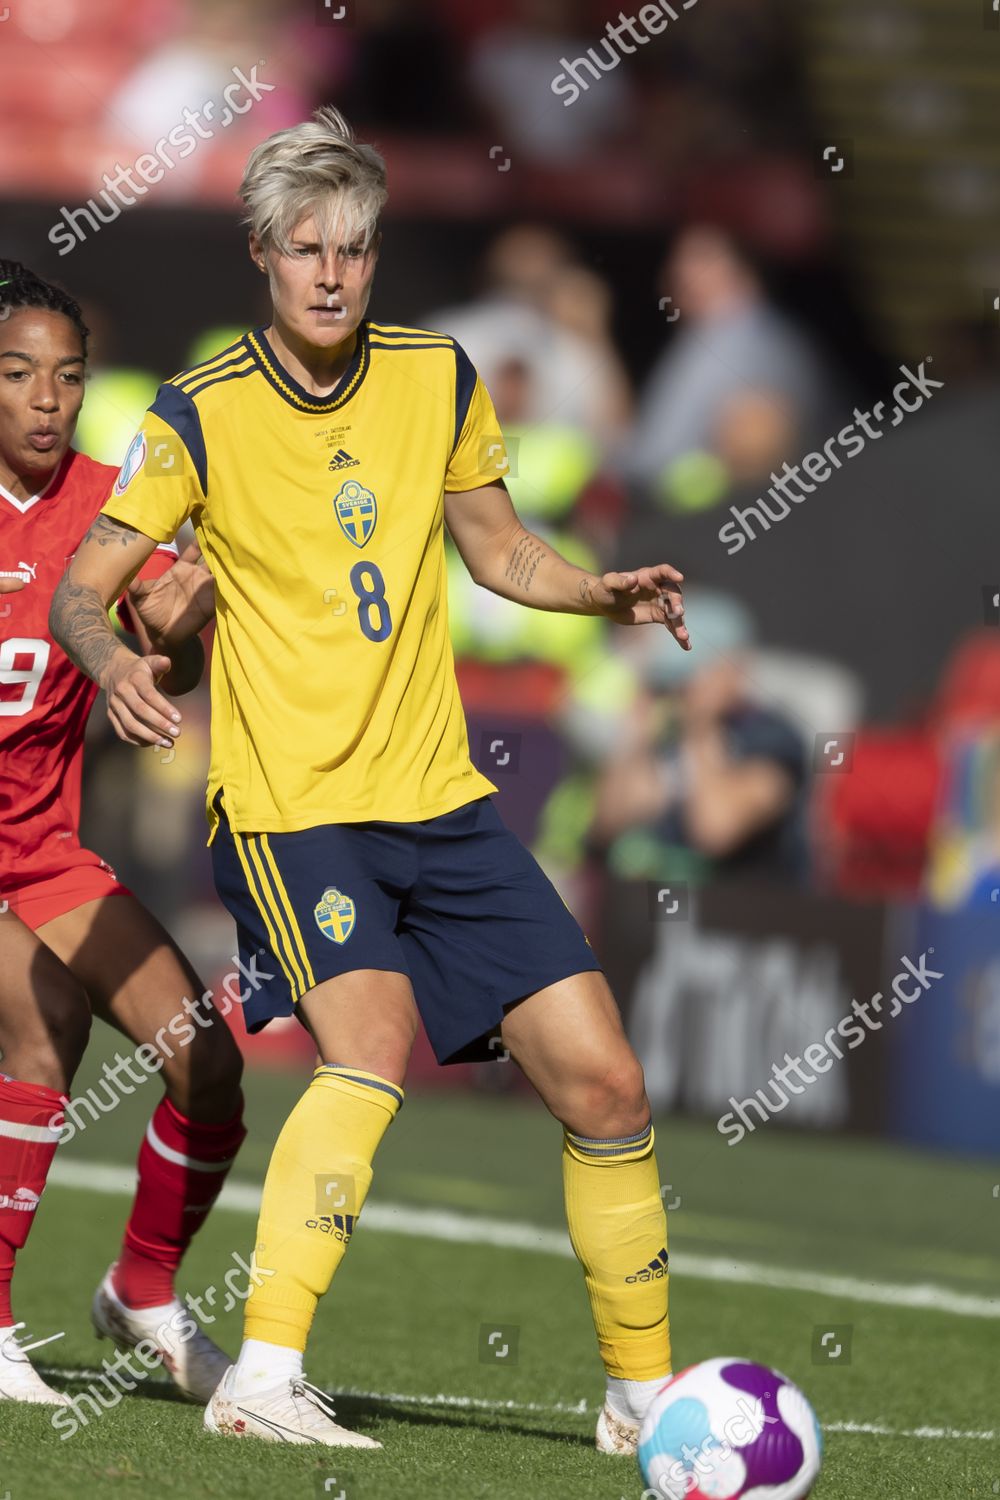 Lina Hurtig Sweden Women During Uefa Editorial Stock Photo Stock Image Shutterstock